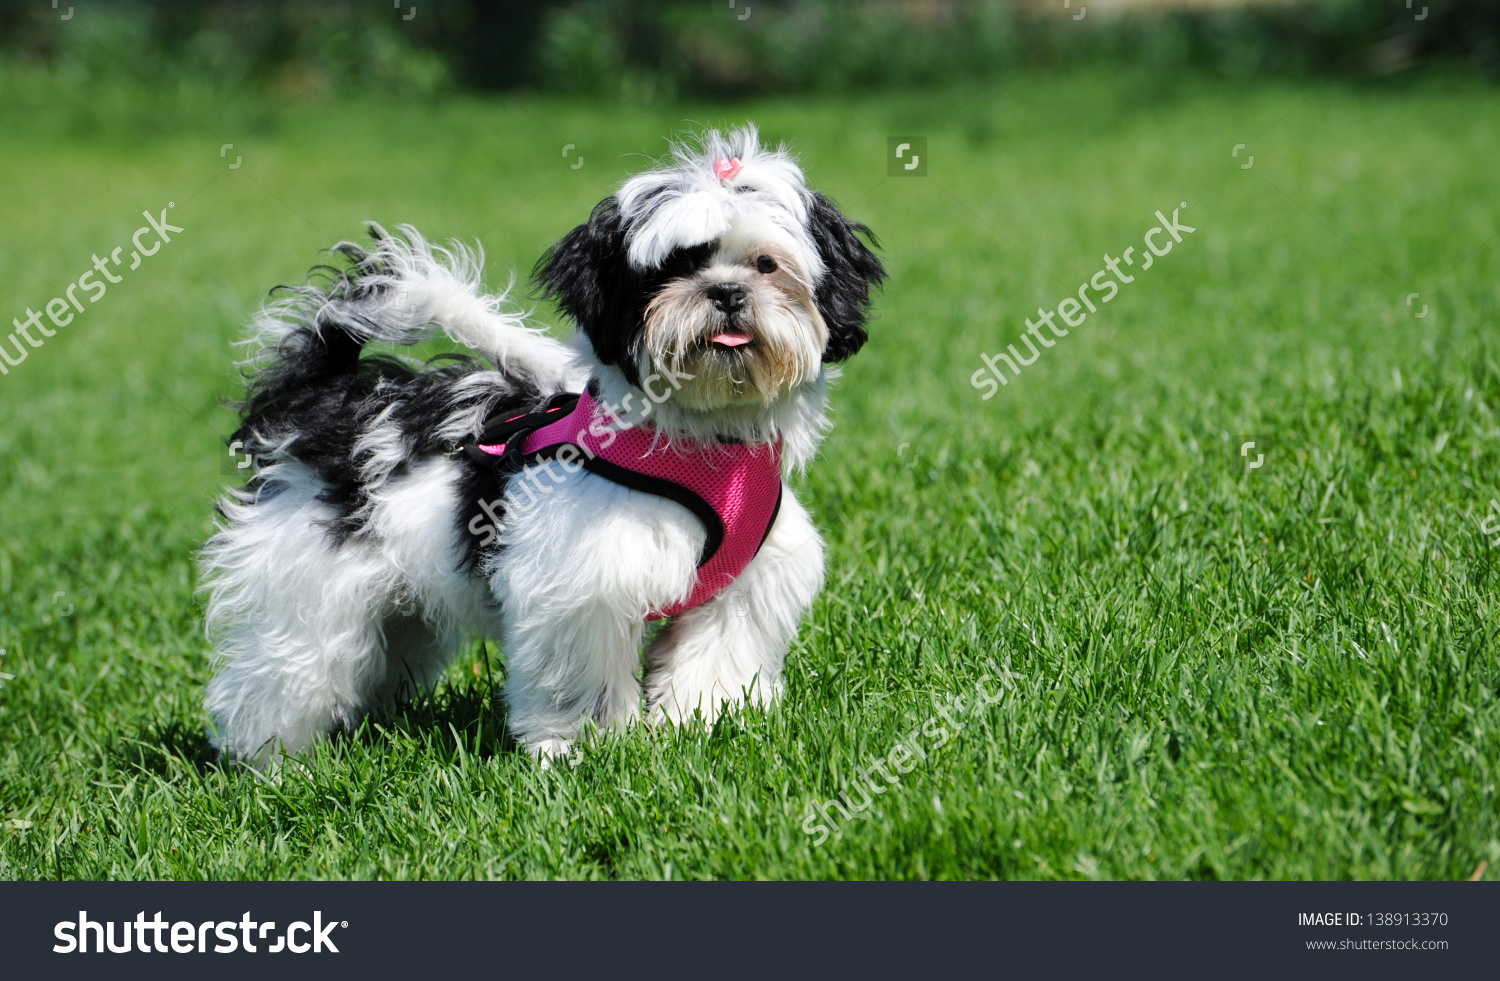 Black And White Shih Tzu Puppy Wearing Harness